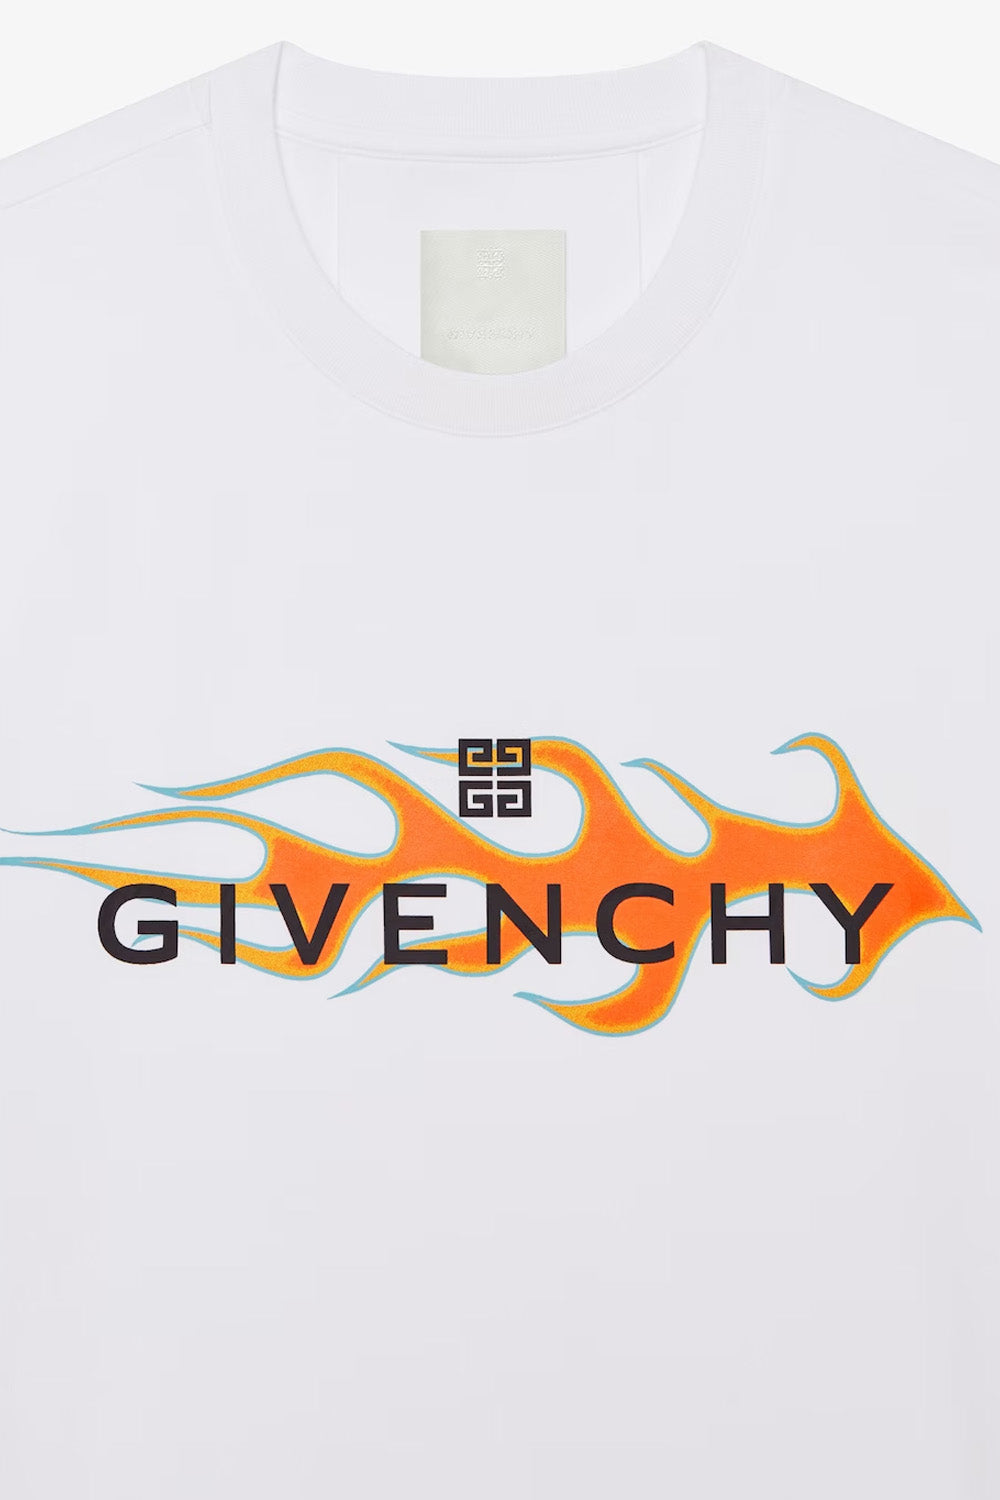 Givenchy Flame logo t-shirt white